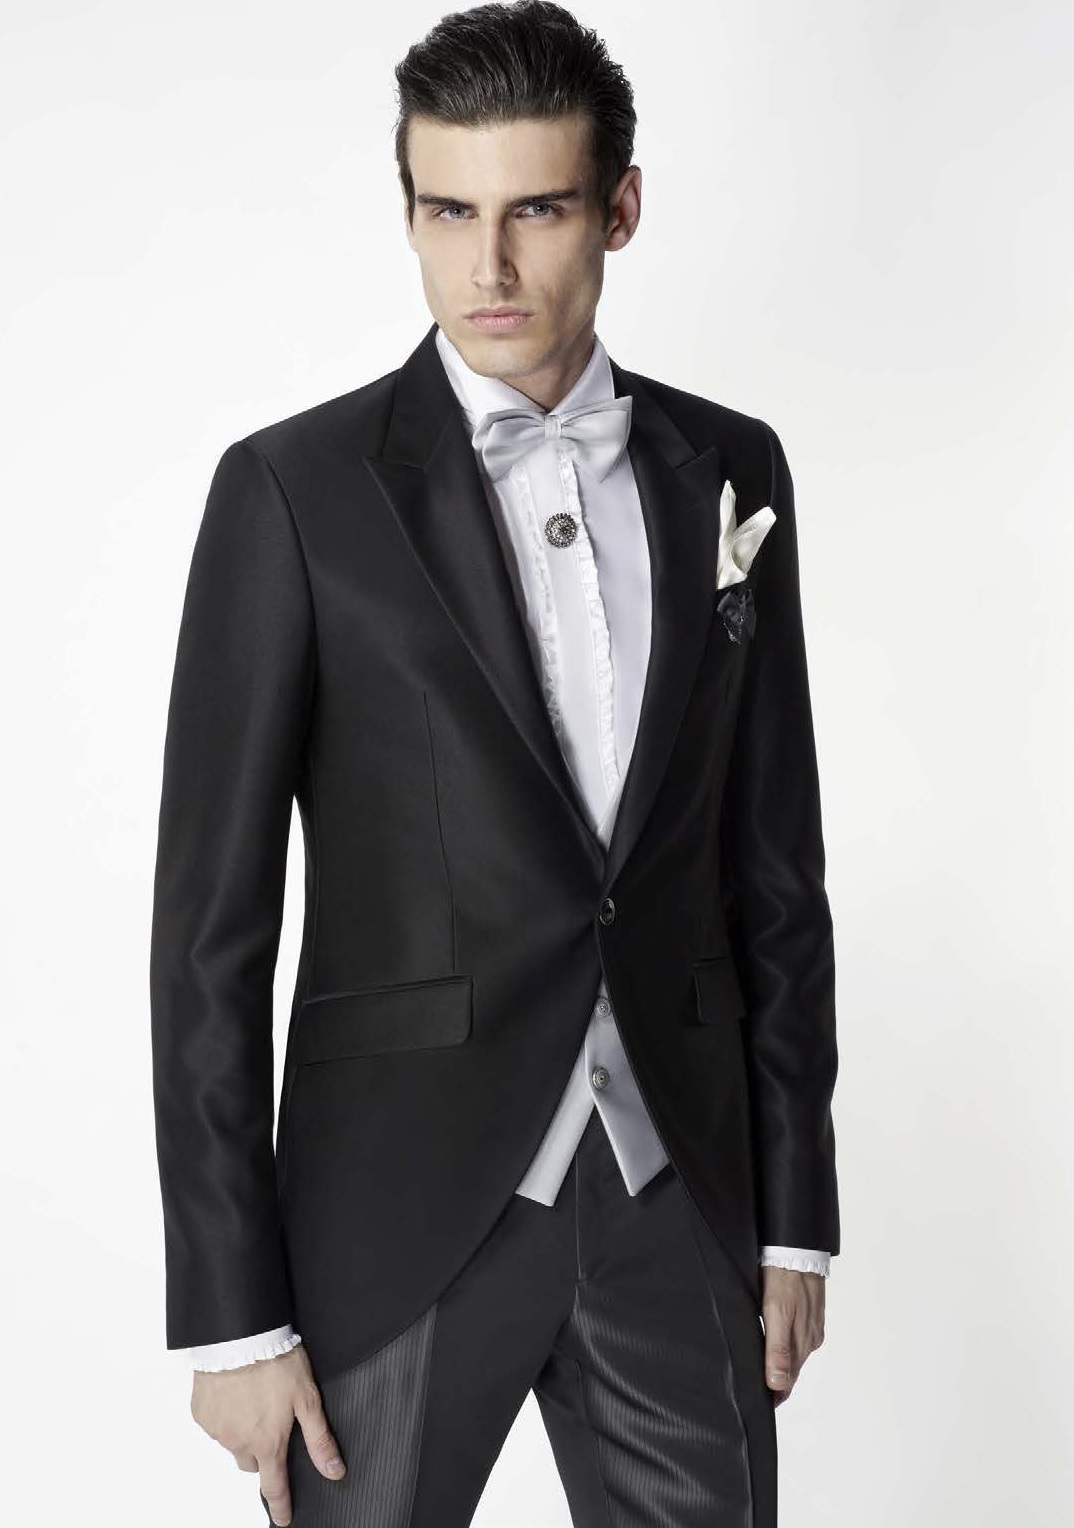 Italian Style Men Suits - Tuxedo Accessories